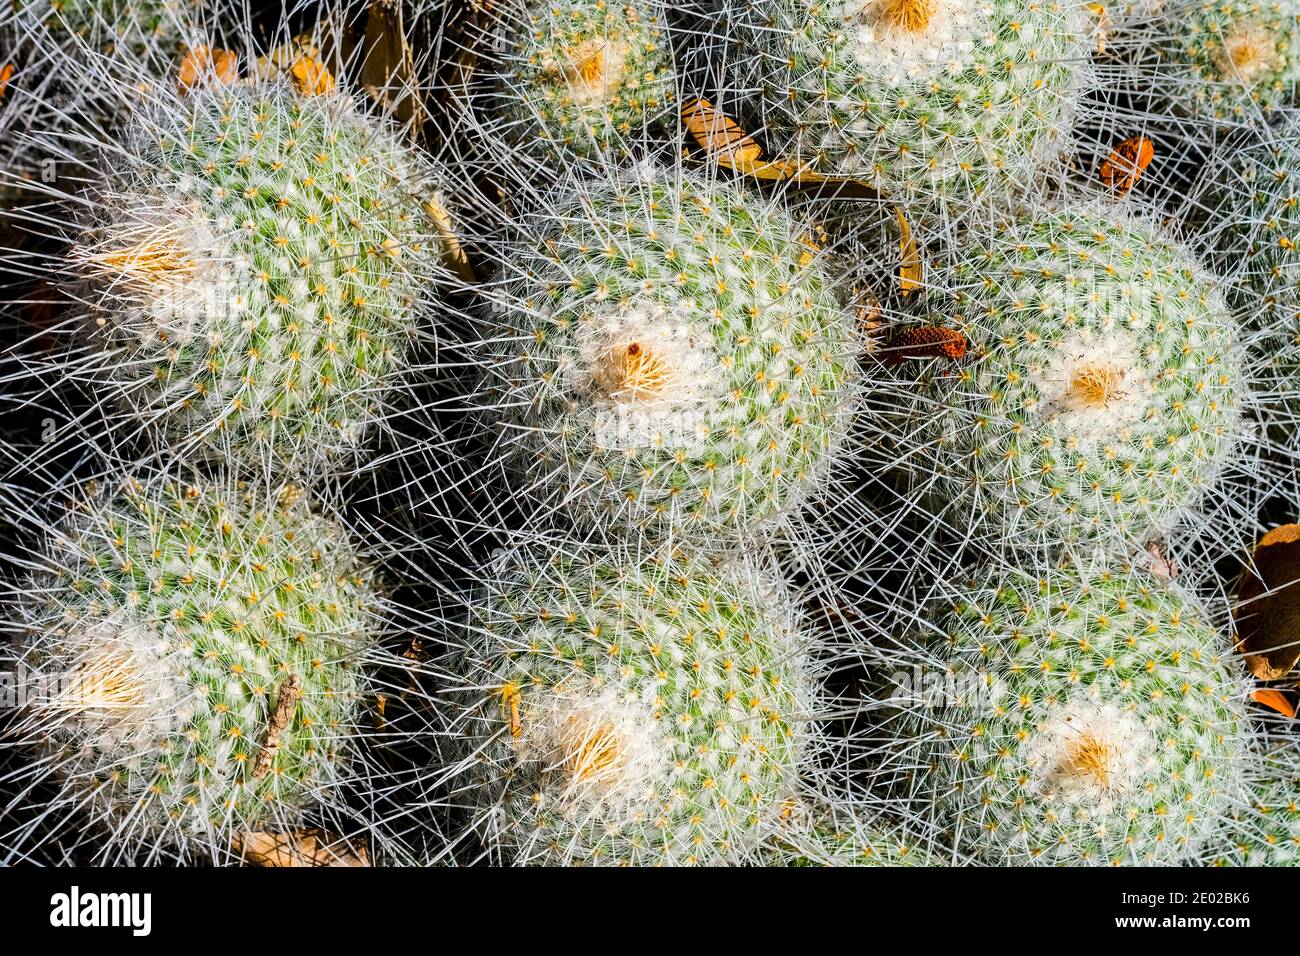 A prickly cactus in the Botanic Gardens in Adelaide Australia Stock Photo